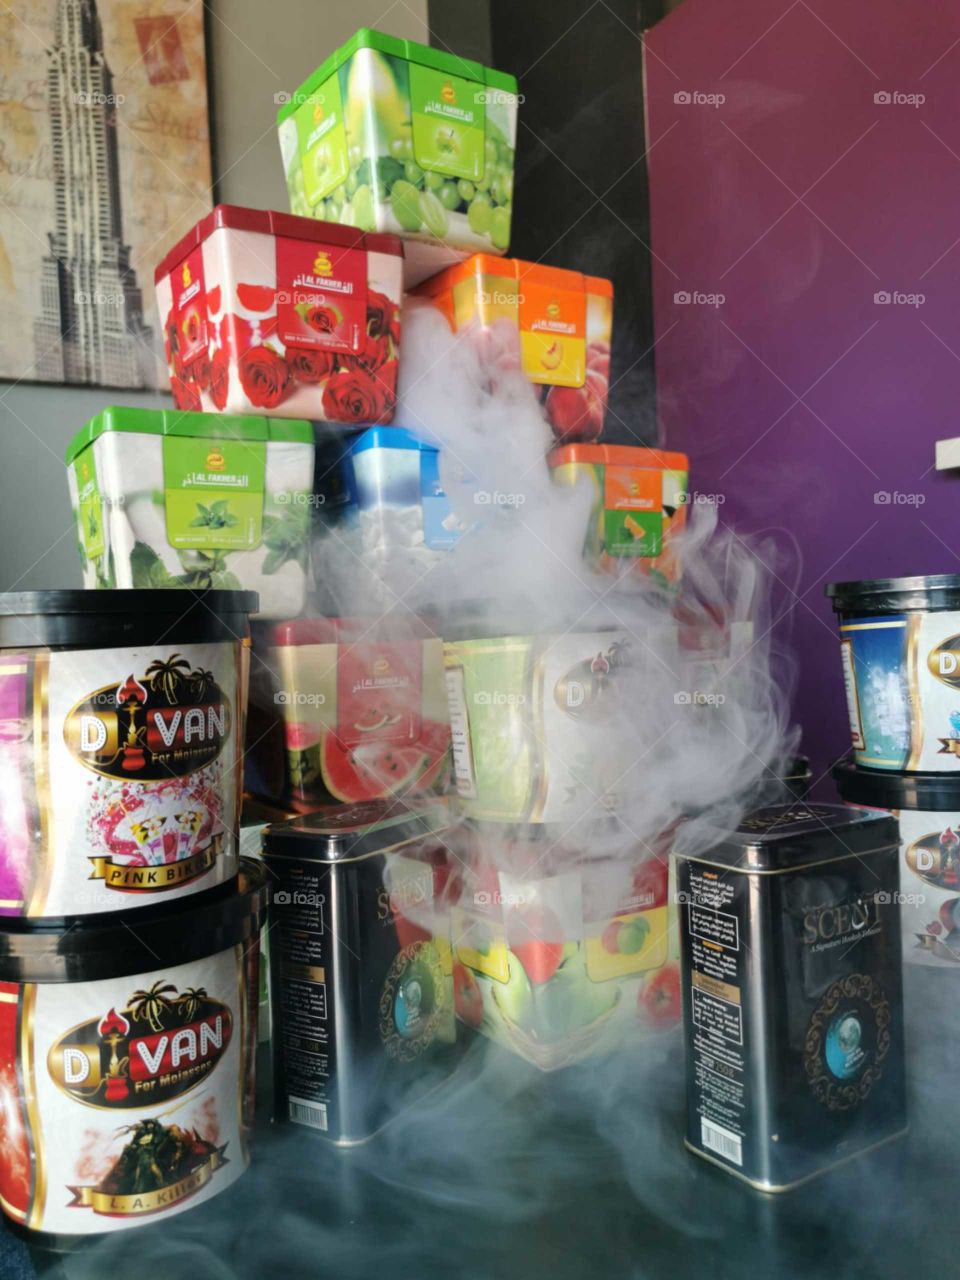 Photo of flavours in smoke. We have few types of flavours, Divan, Al Faher, and Adalya. Best shisha in Belgrade